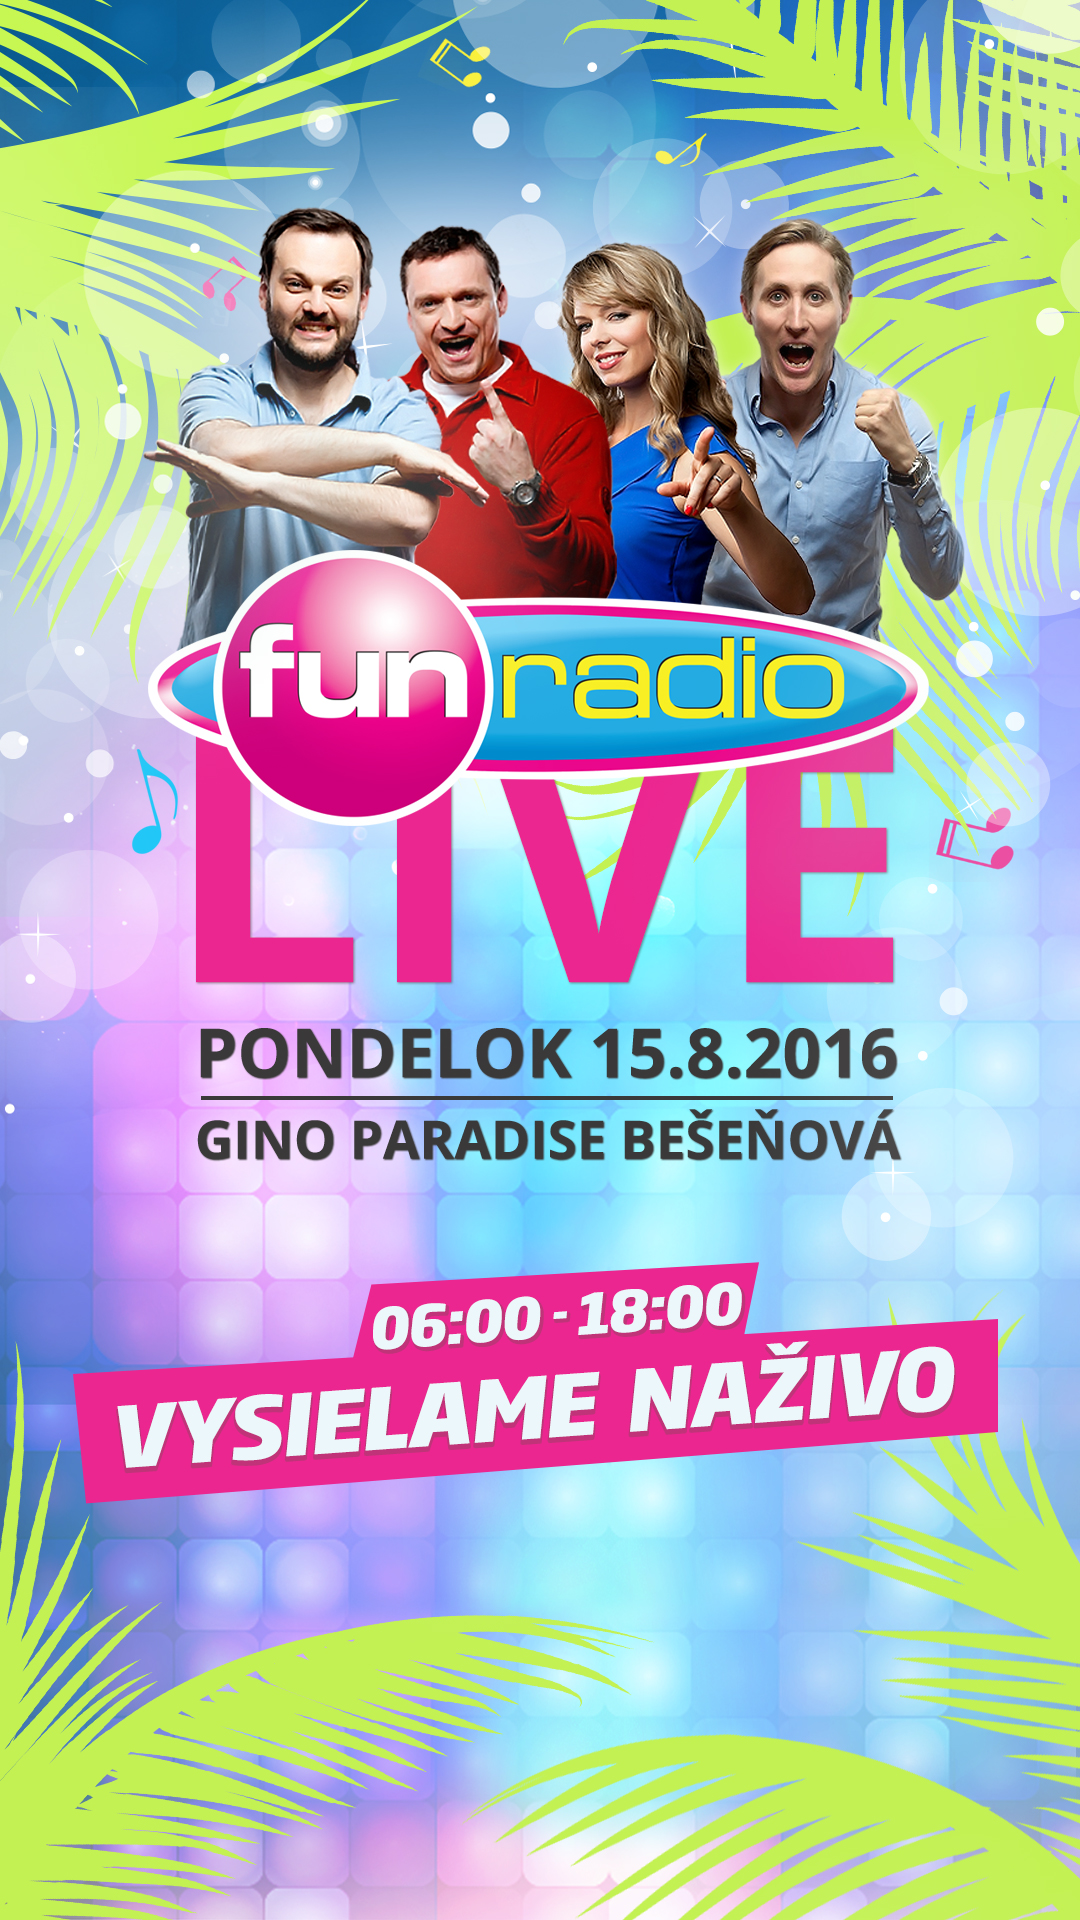 Fun rádio Bešeňová